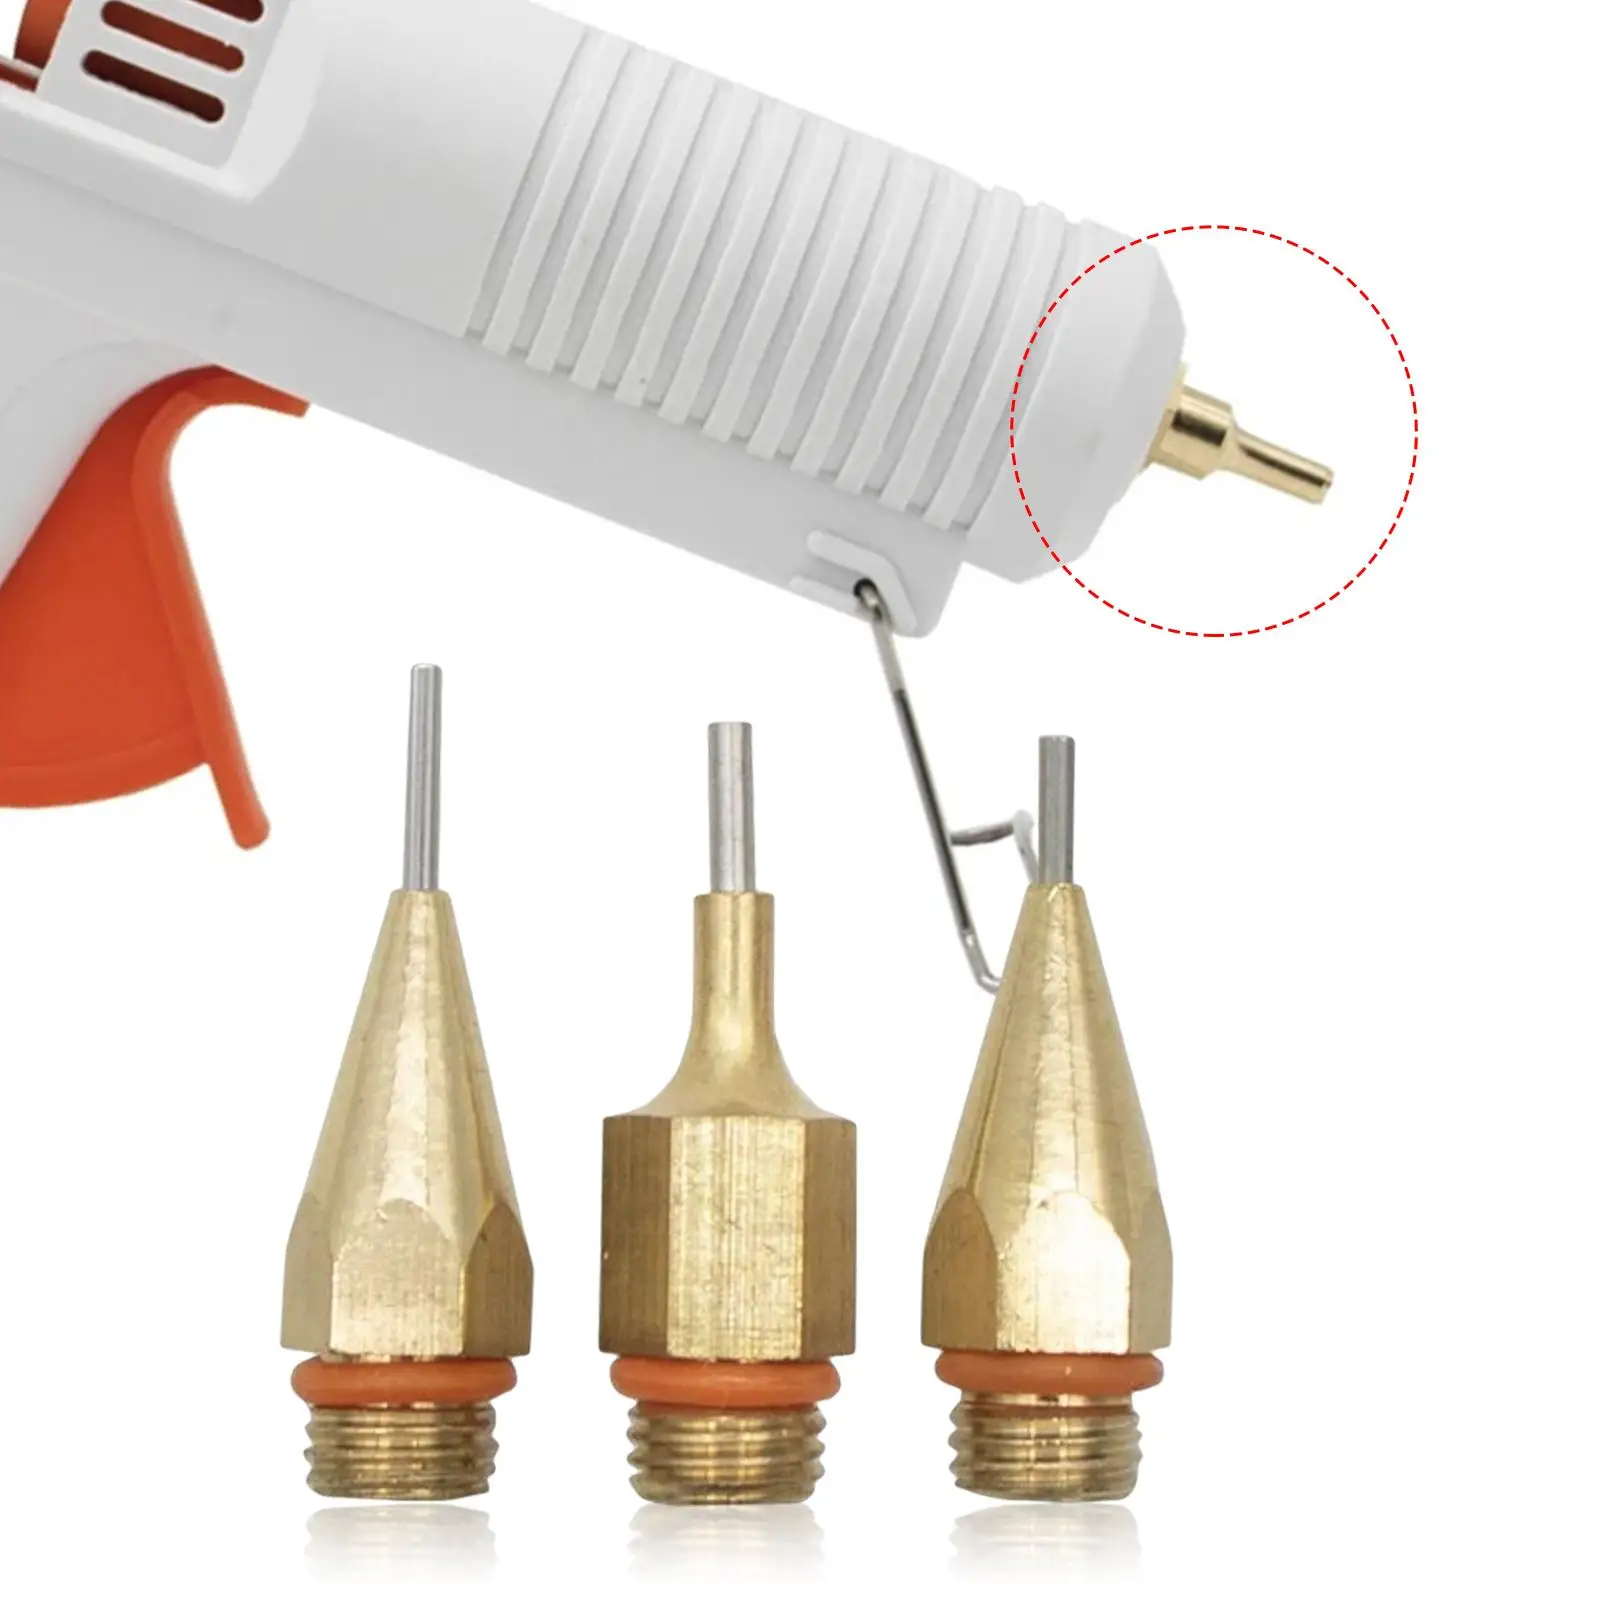 3x Hot Melt Glue Tool Nozzle 1mm 1.3mm 1.5mm Melting Glue Tool Use Heavy Duty